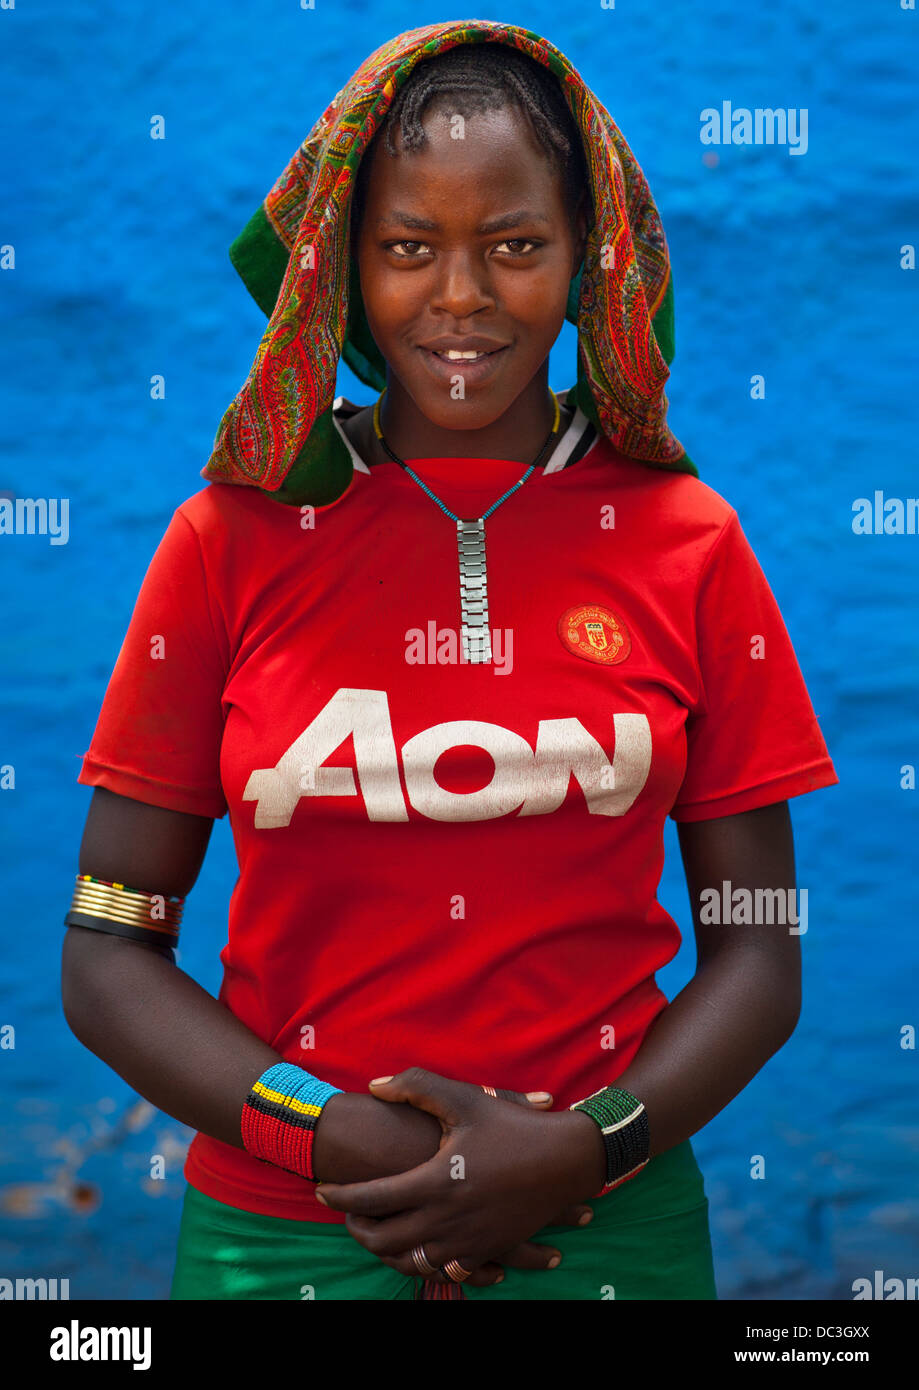 Hamer Tribe Man With A Manchester United Football Shirt, Turmi, Omo Valley, Ethiopia Stock Photo